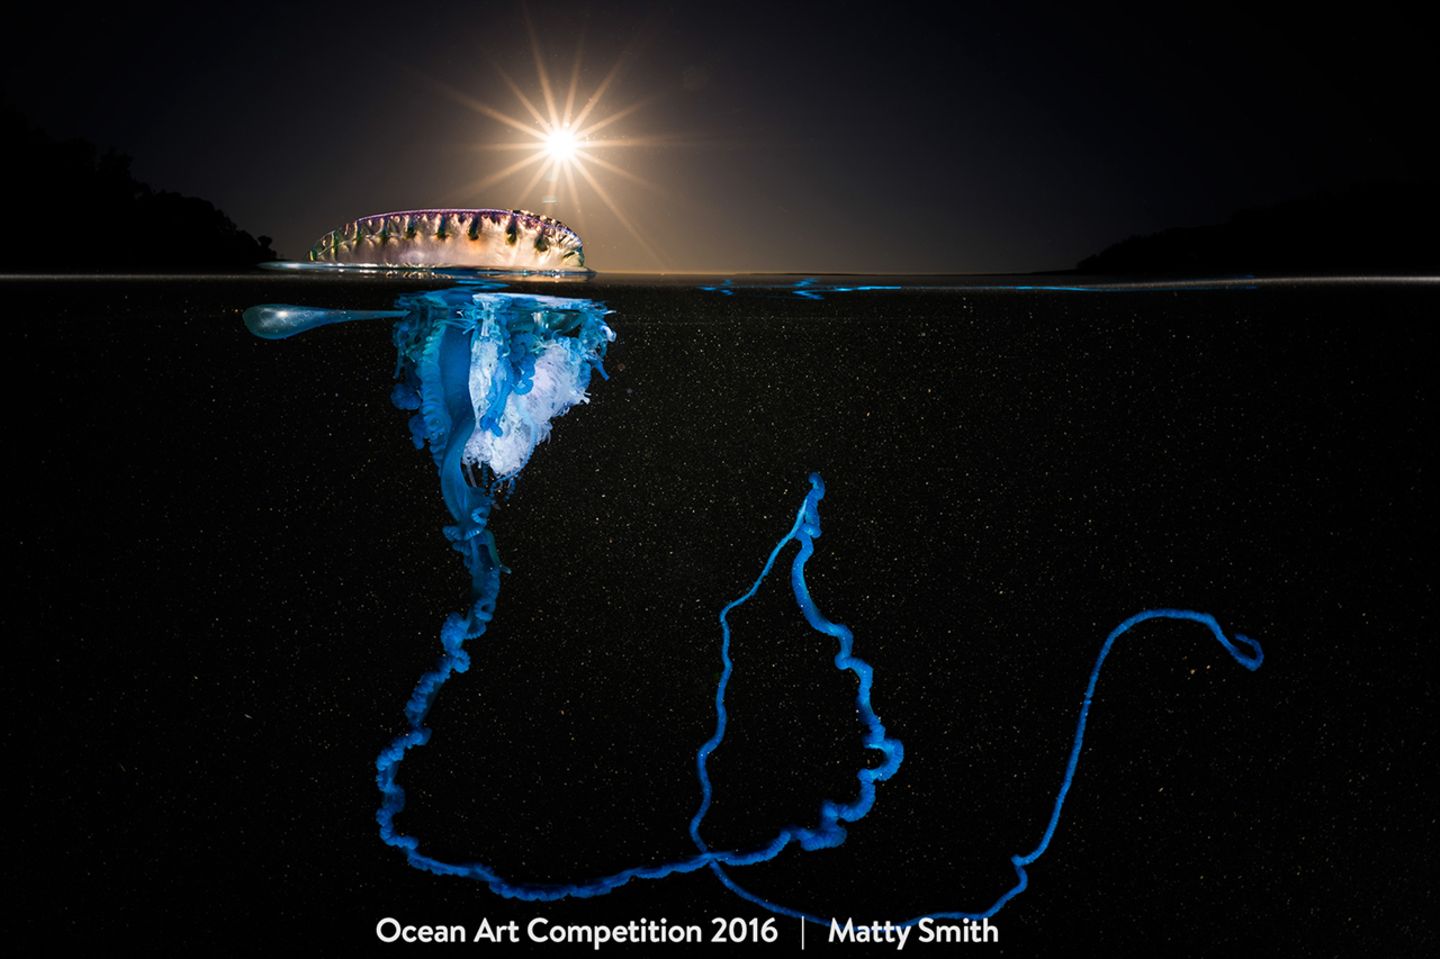 Ocean Art Competition 2016 / Matty Smith